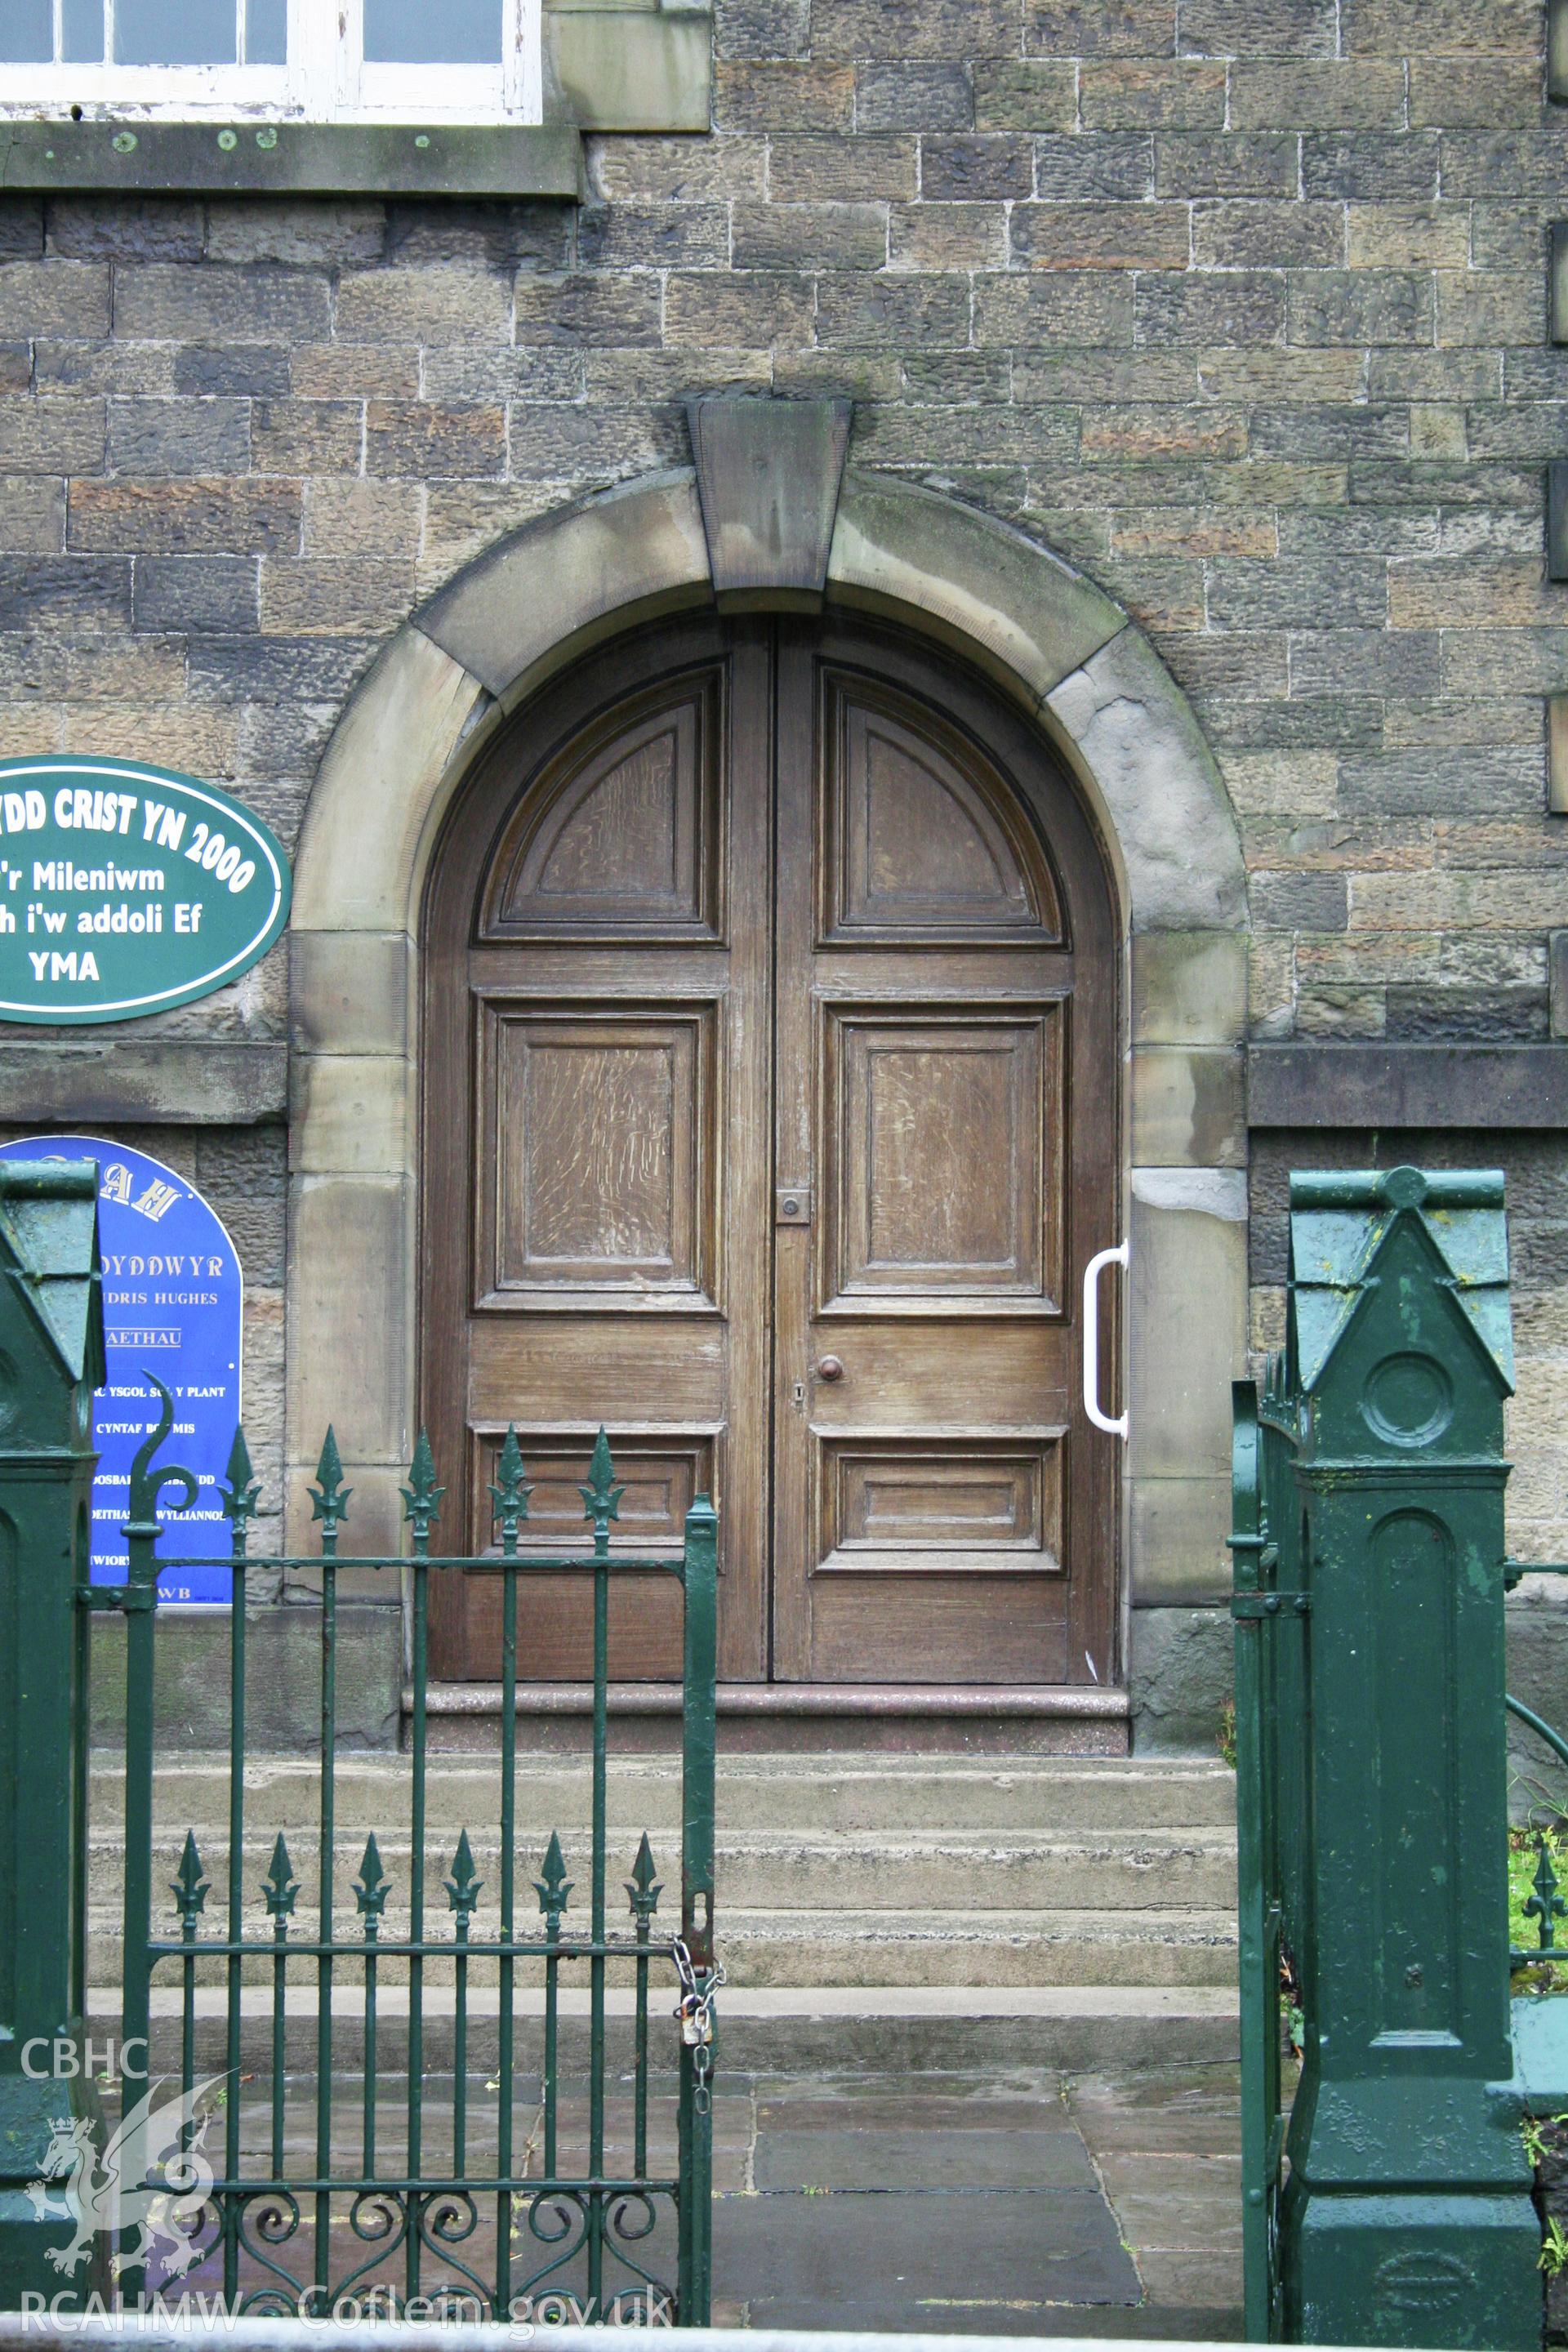 Moriah Chapel front fa?ade, detail of entrance.